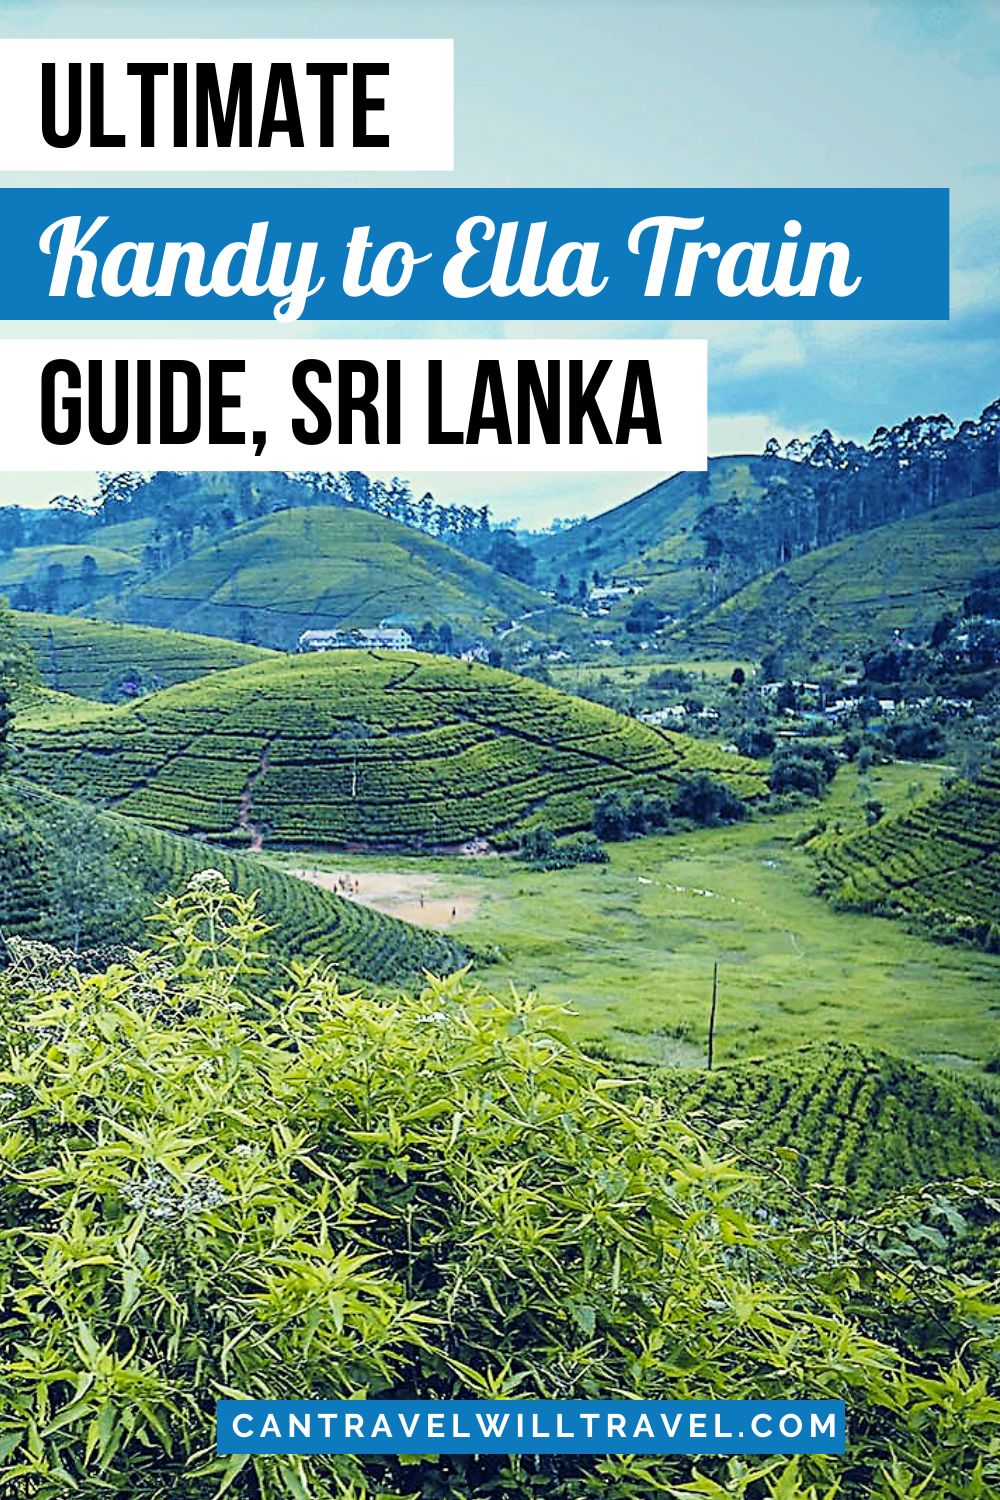 Kandy to Ella Train Guide, Sri Lanka